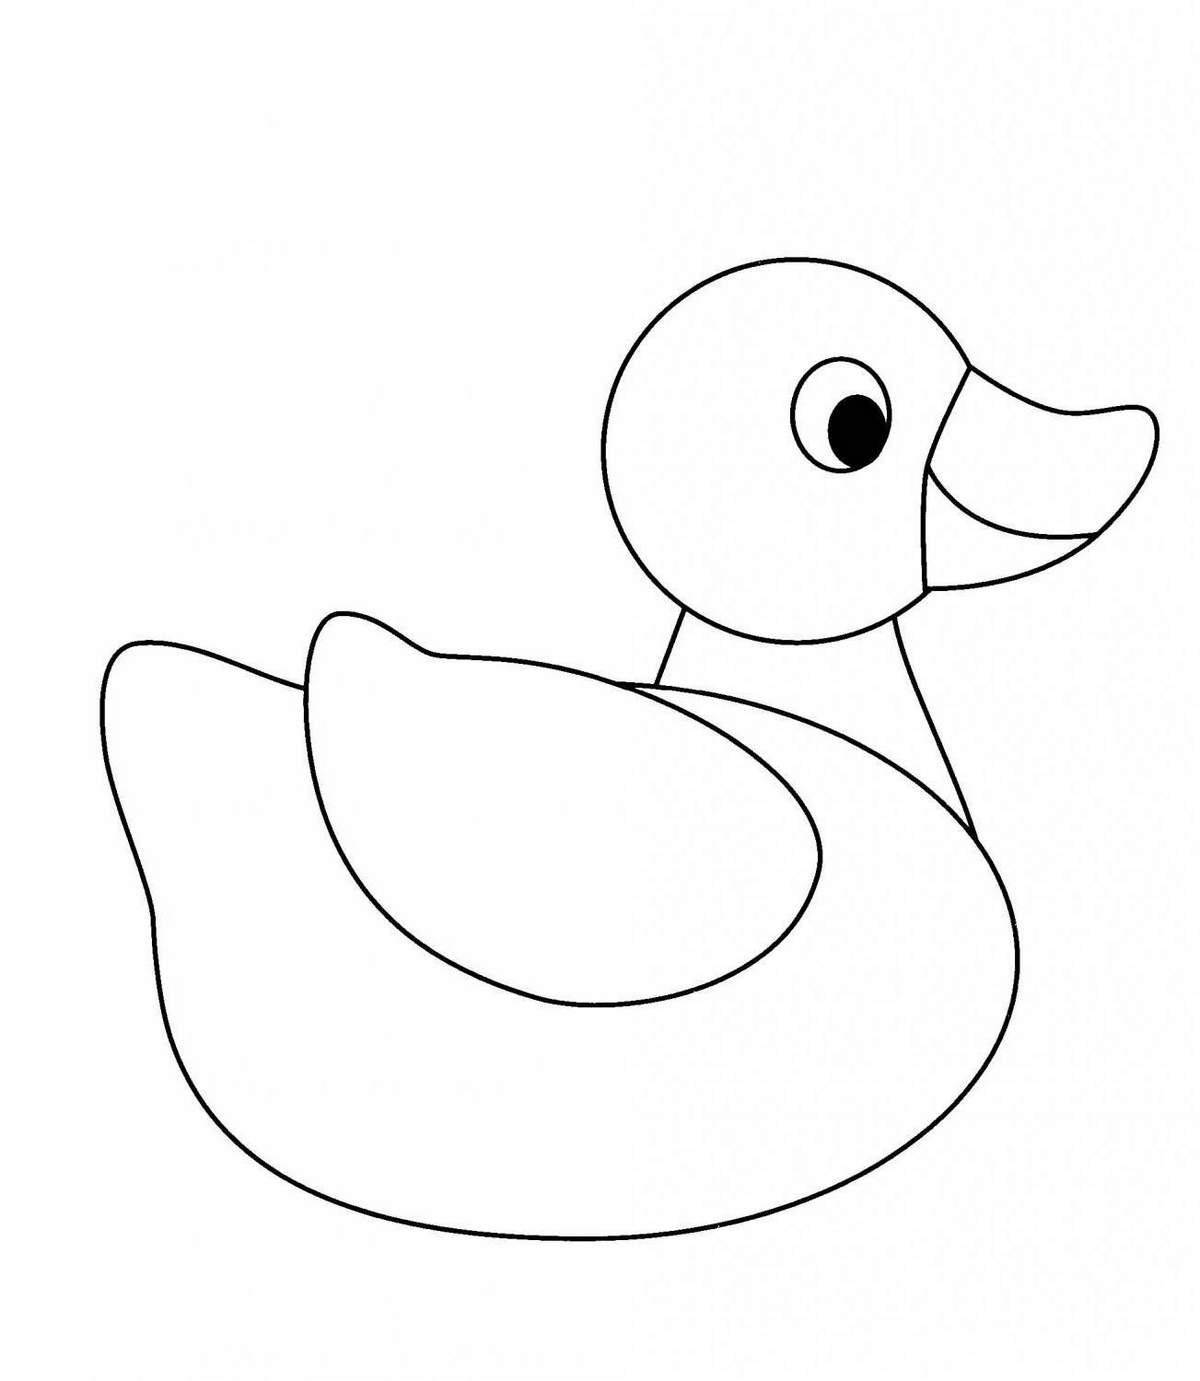 Coloring page joyful Dymkovo duck